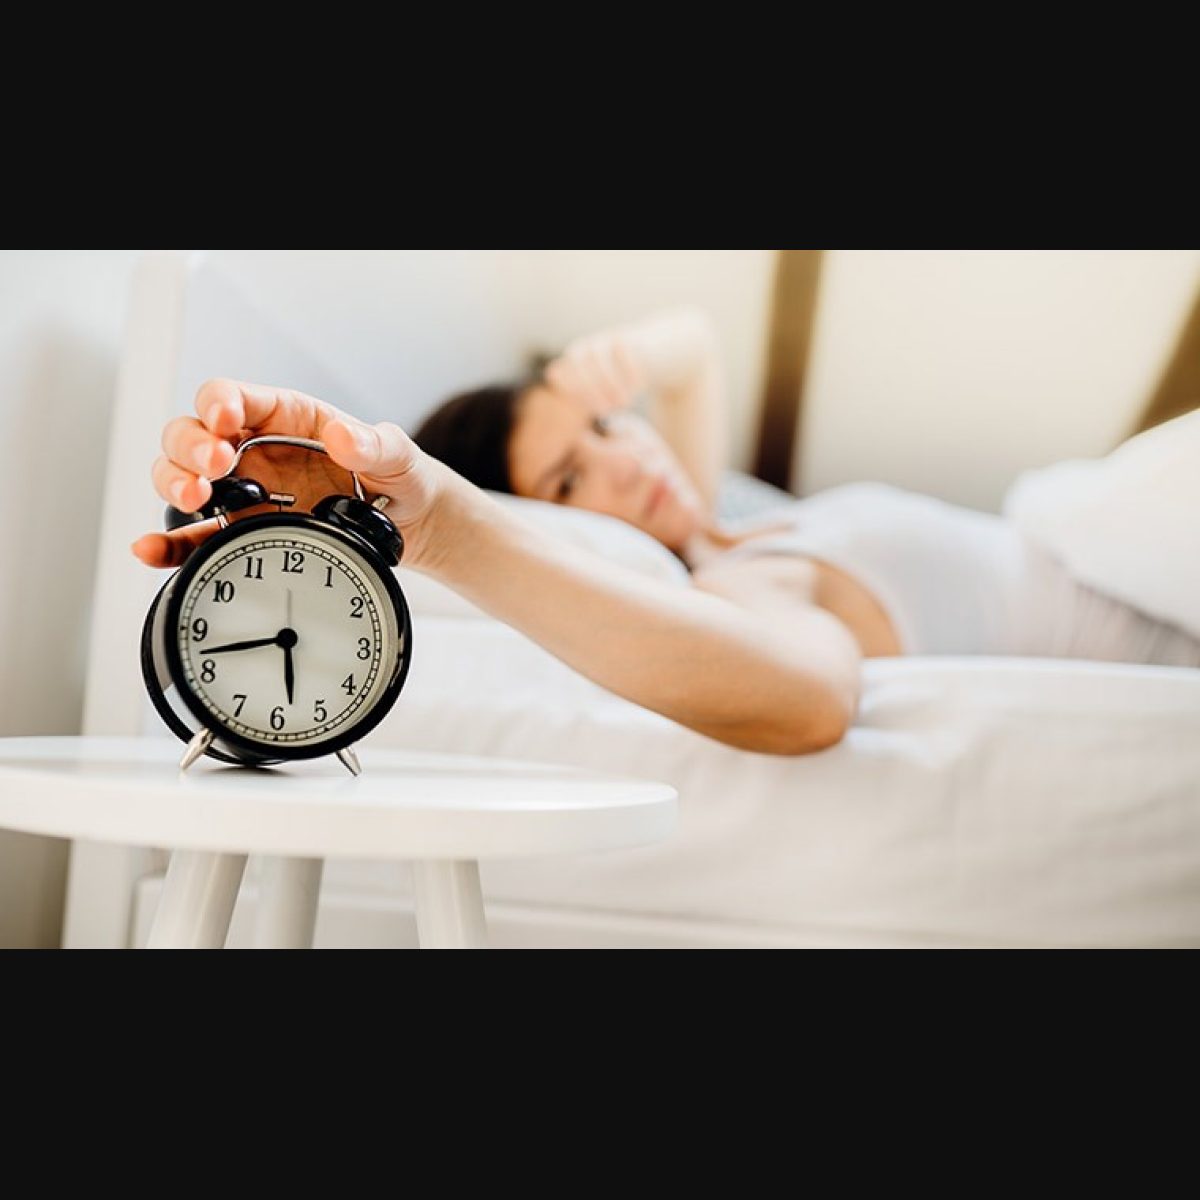 Good sleep can increase women's work ambitions